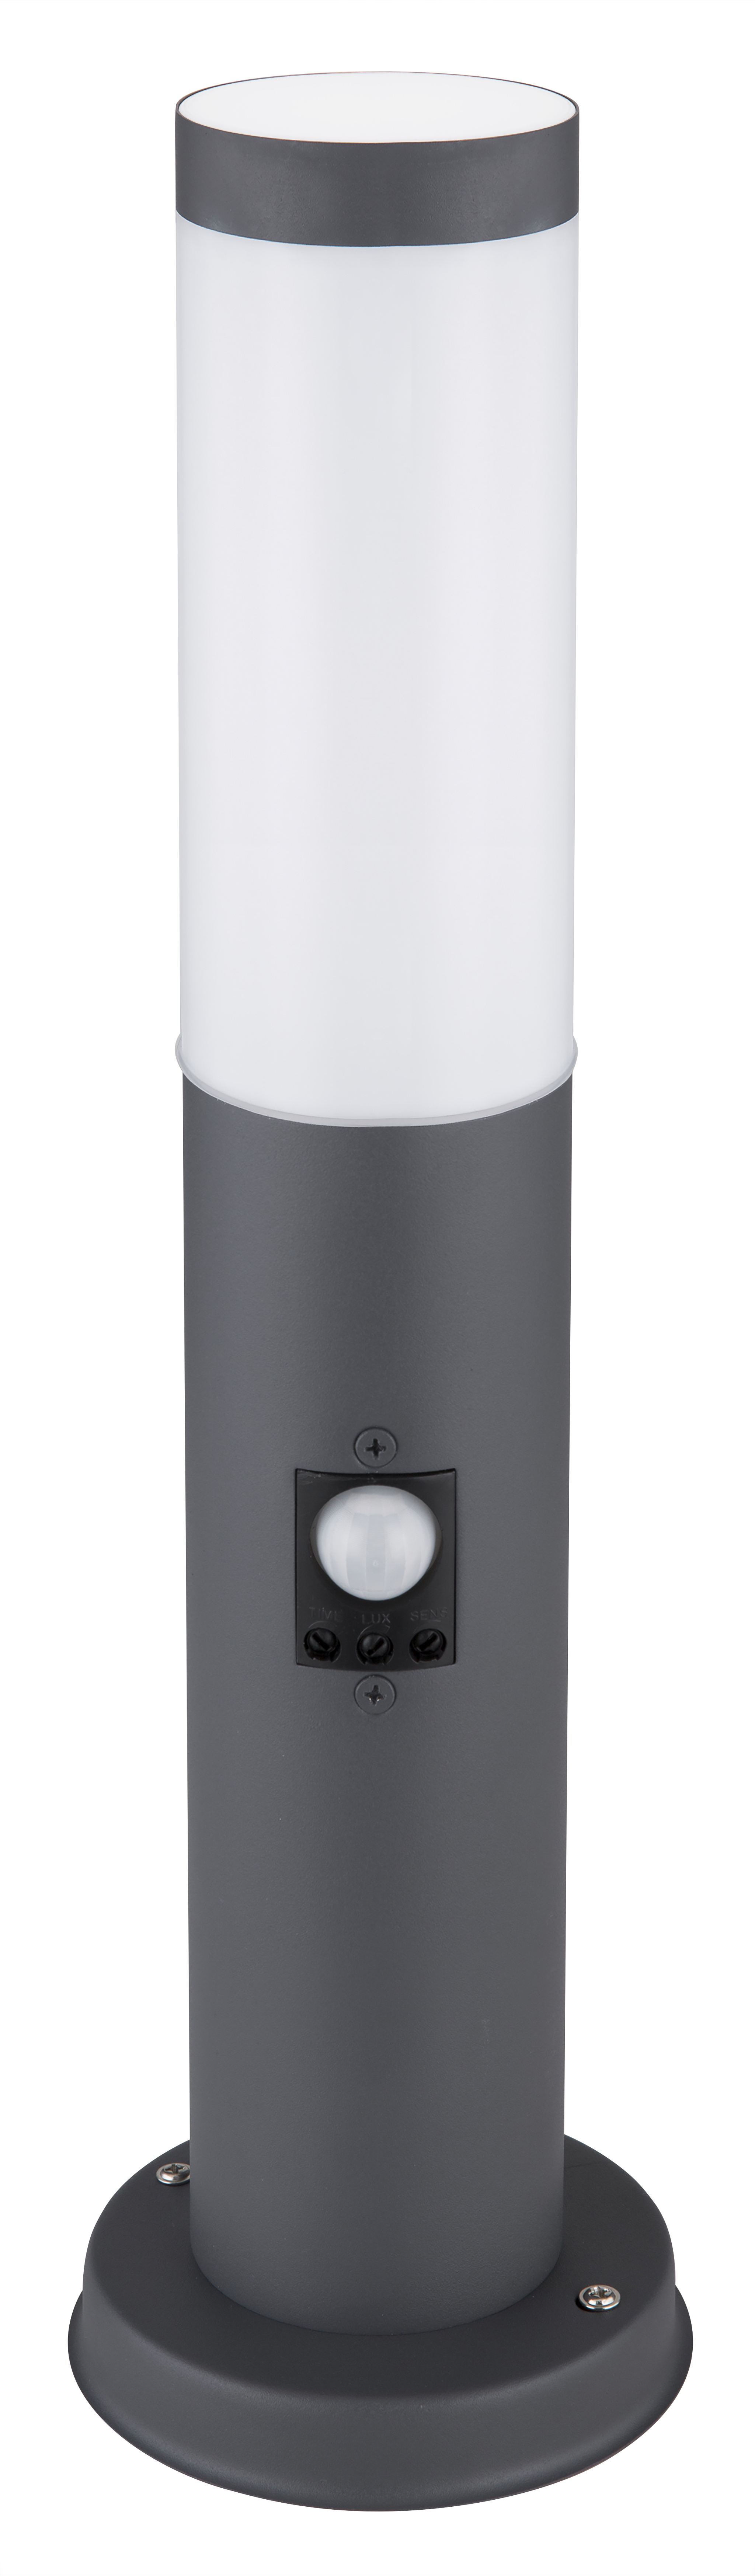 Vanjska podna svjetiljka sa senzorom pokreta Boston 12,7x12,7x45cm siva